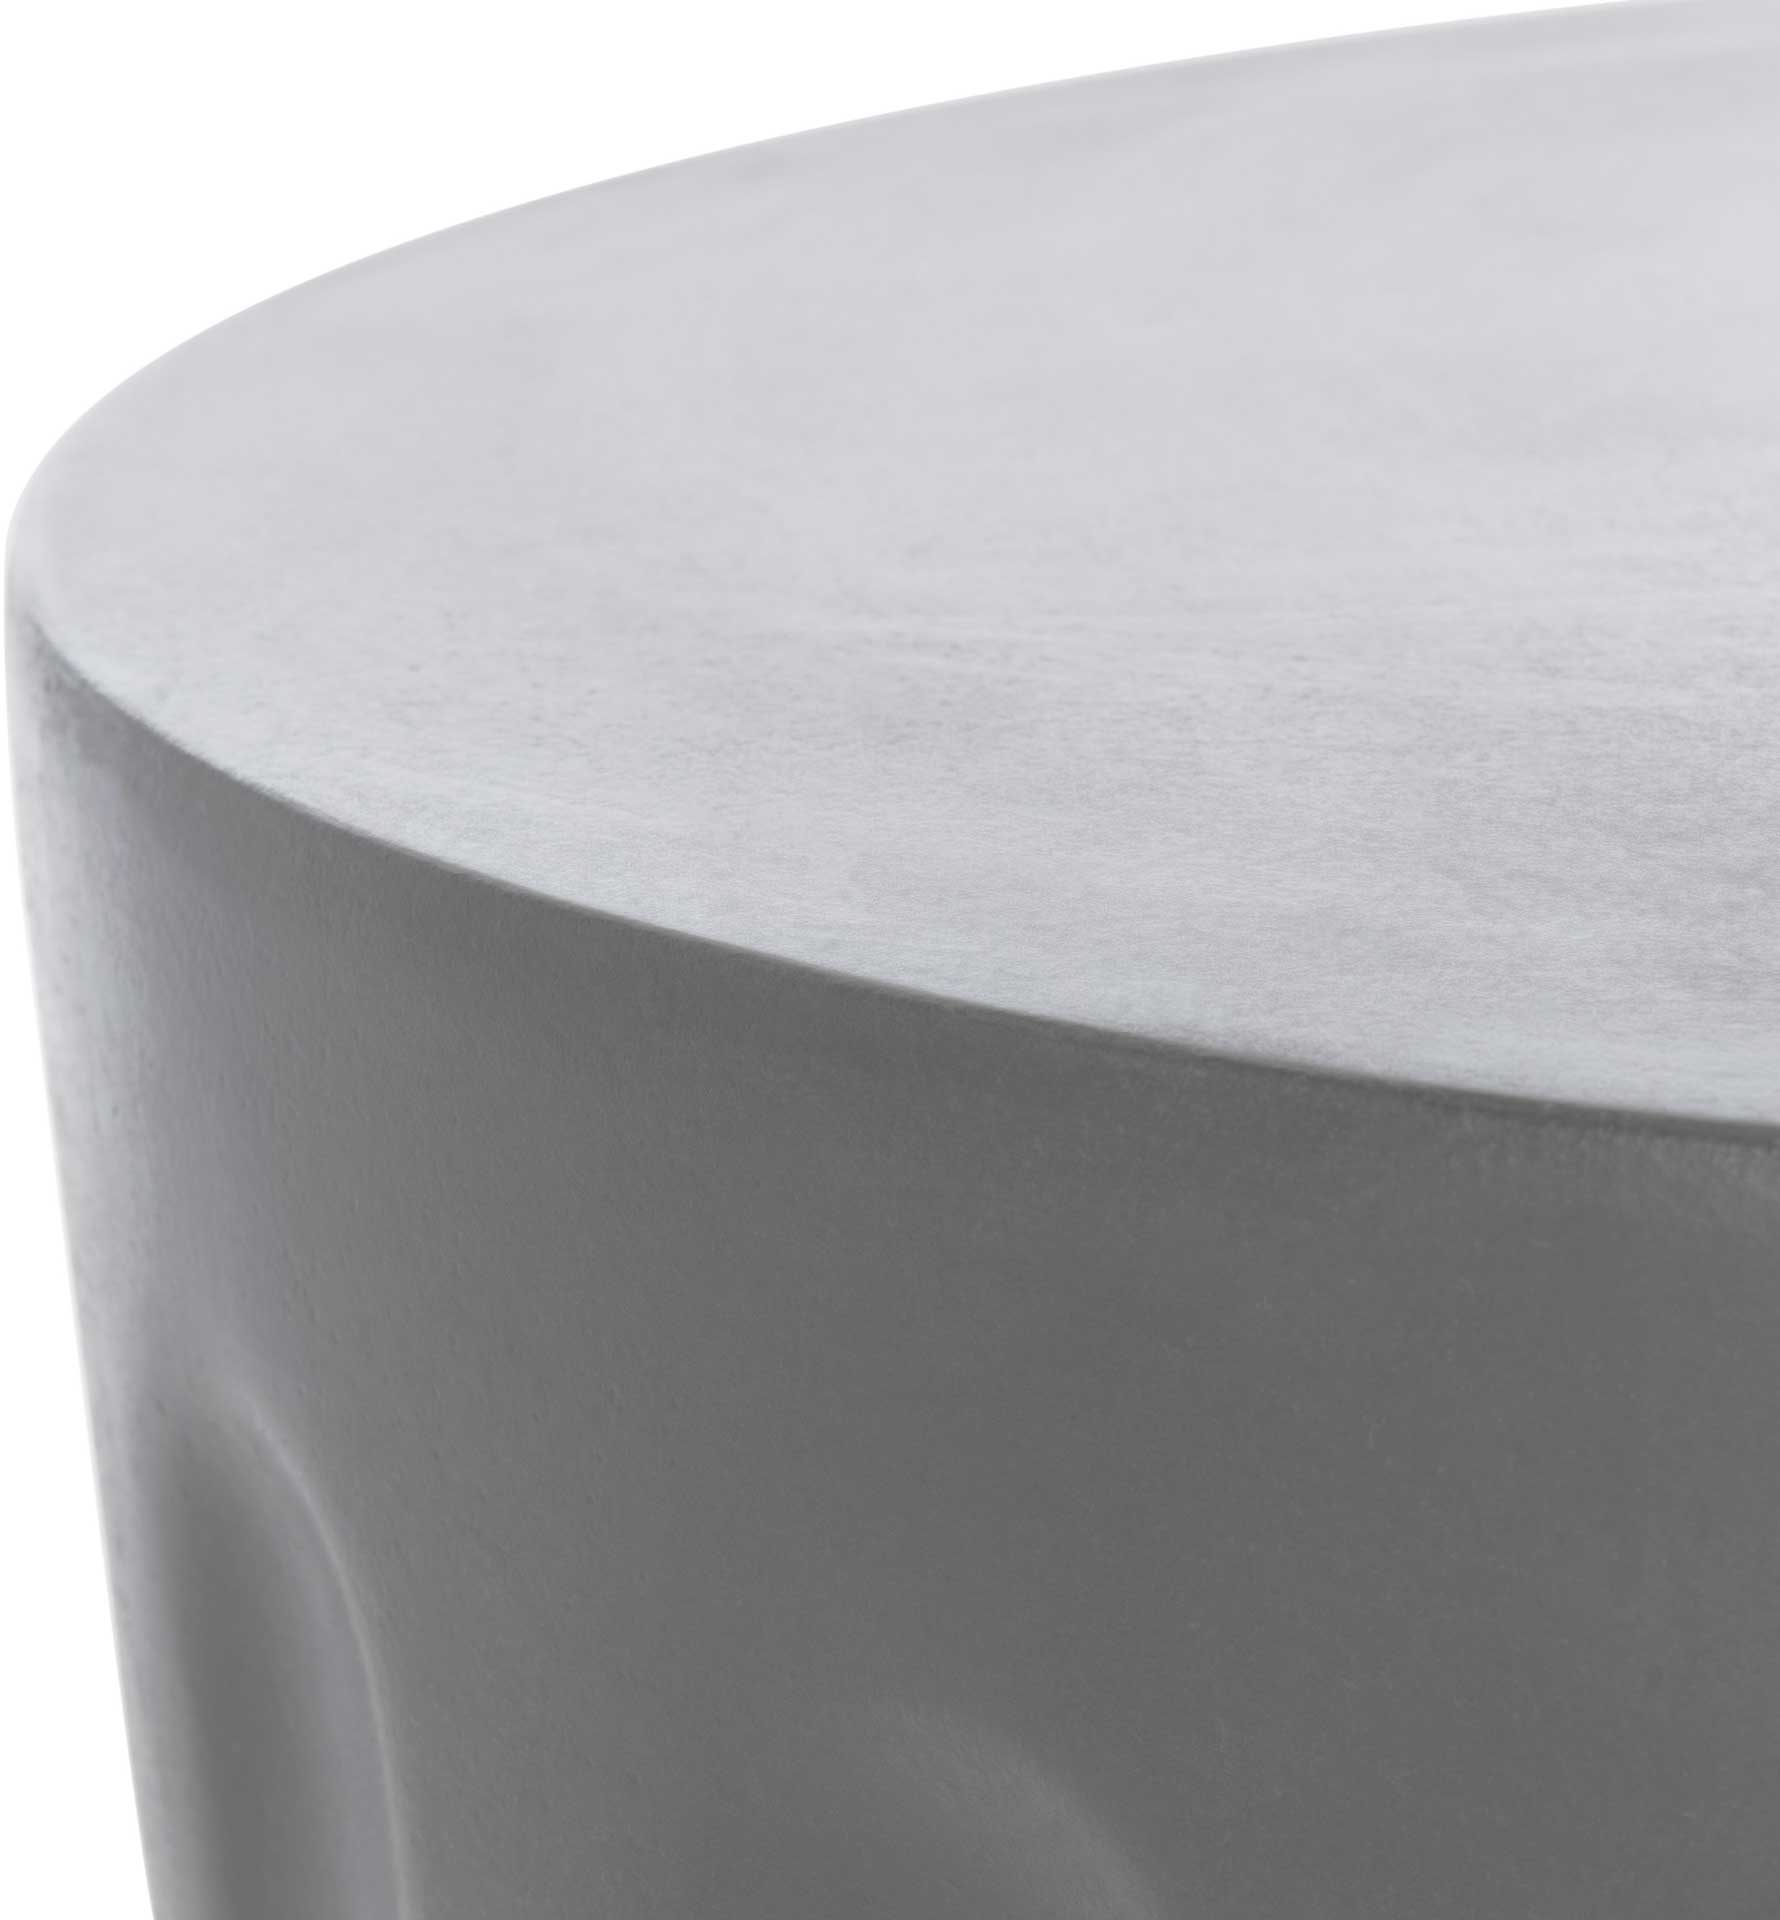 Verdi Modern Concrete Round Accent Table Dark Gray